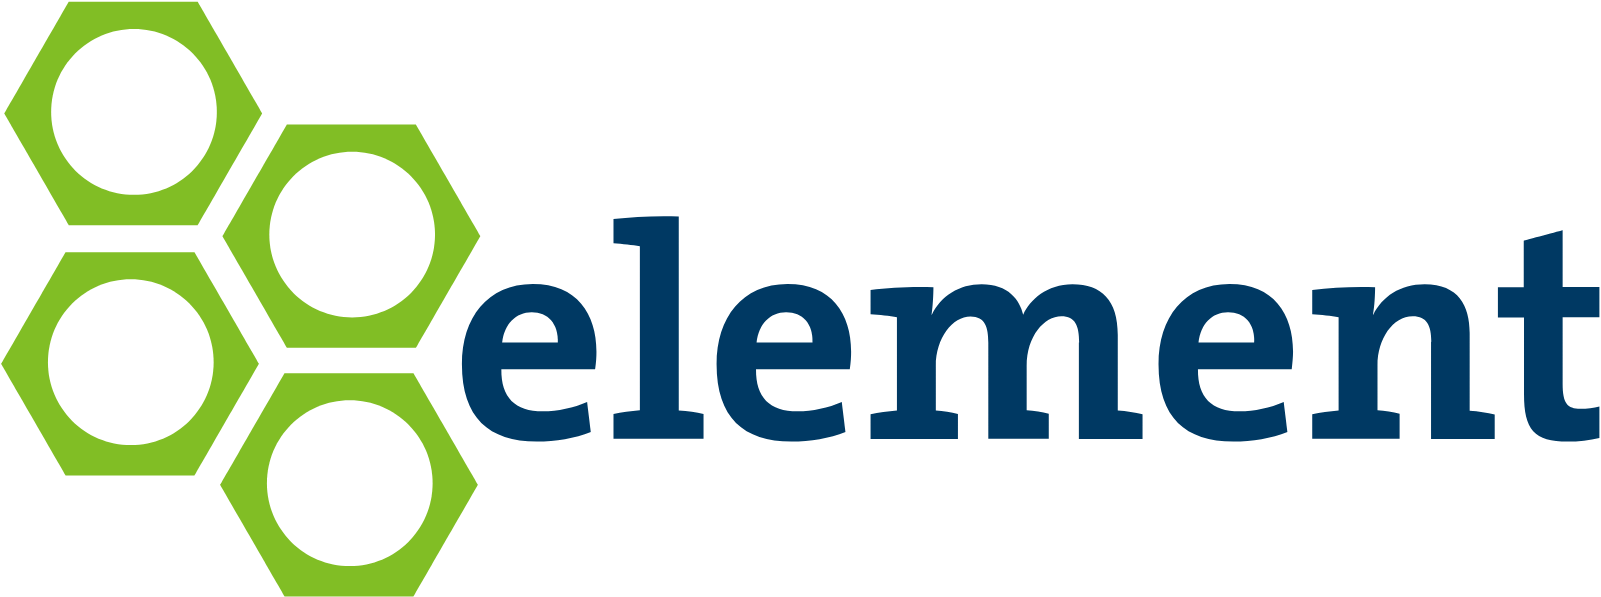 Element Fleet Management
 logo large (transparent PNG)